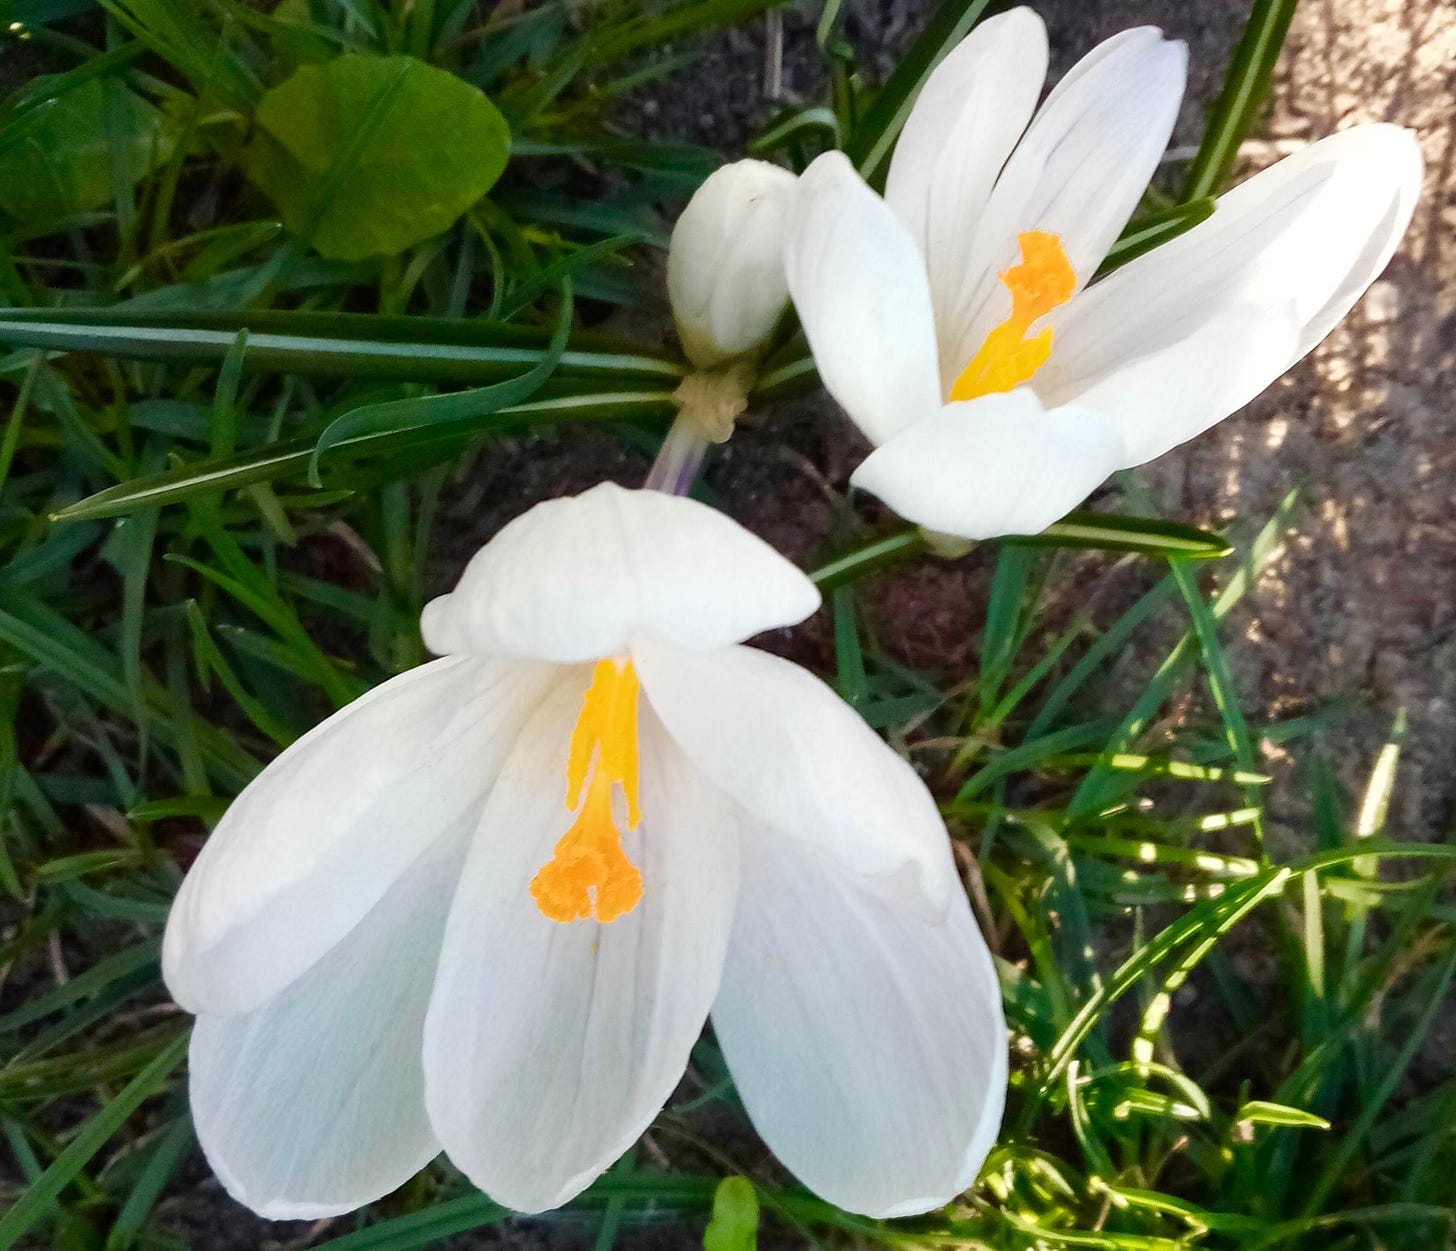 White crocus blossom opening